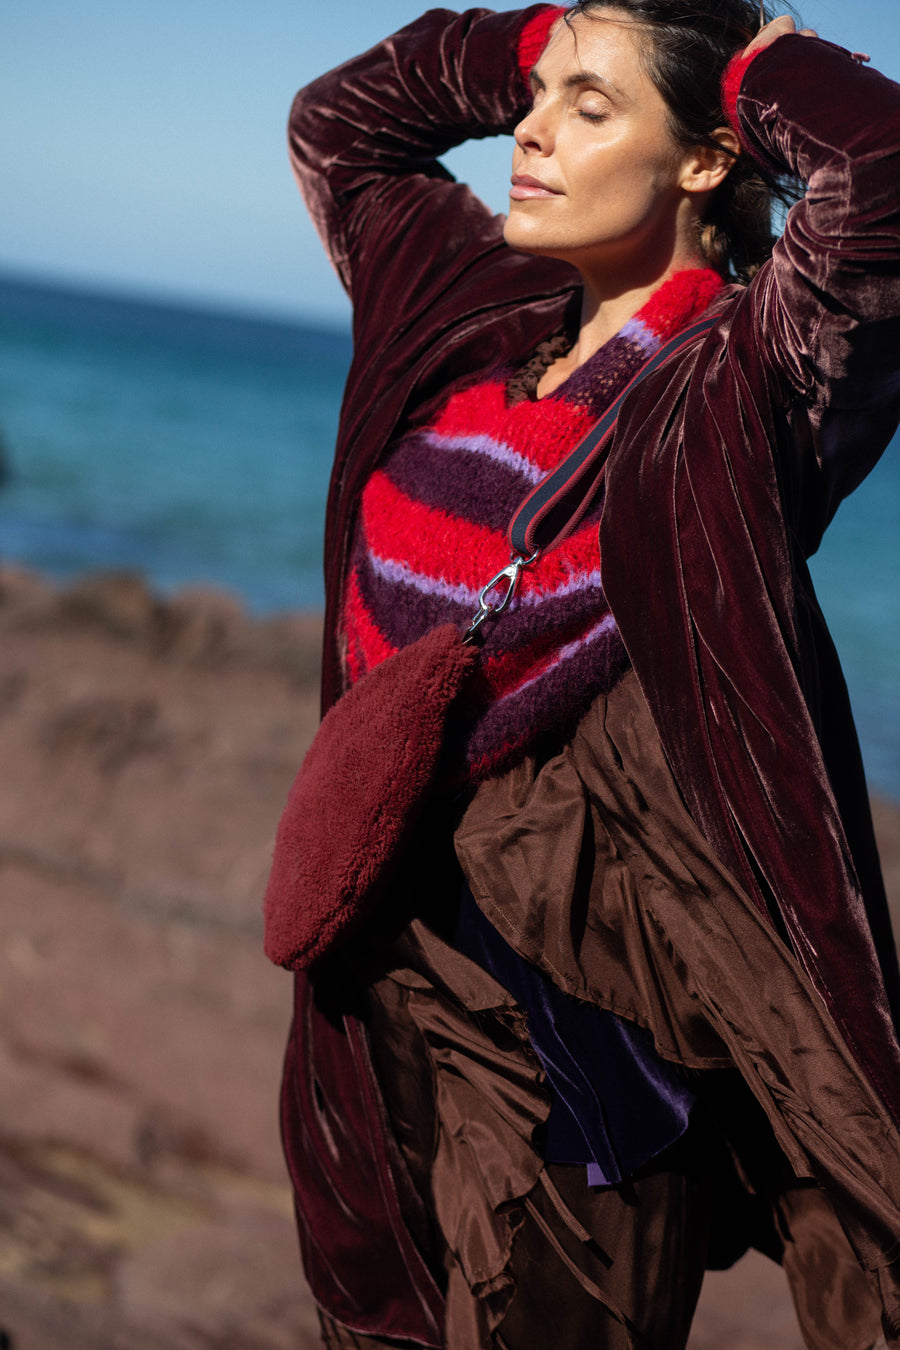 Handknit variegated stripe batwing sweater